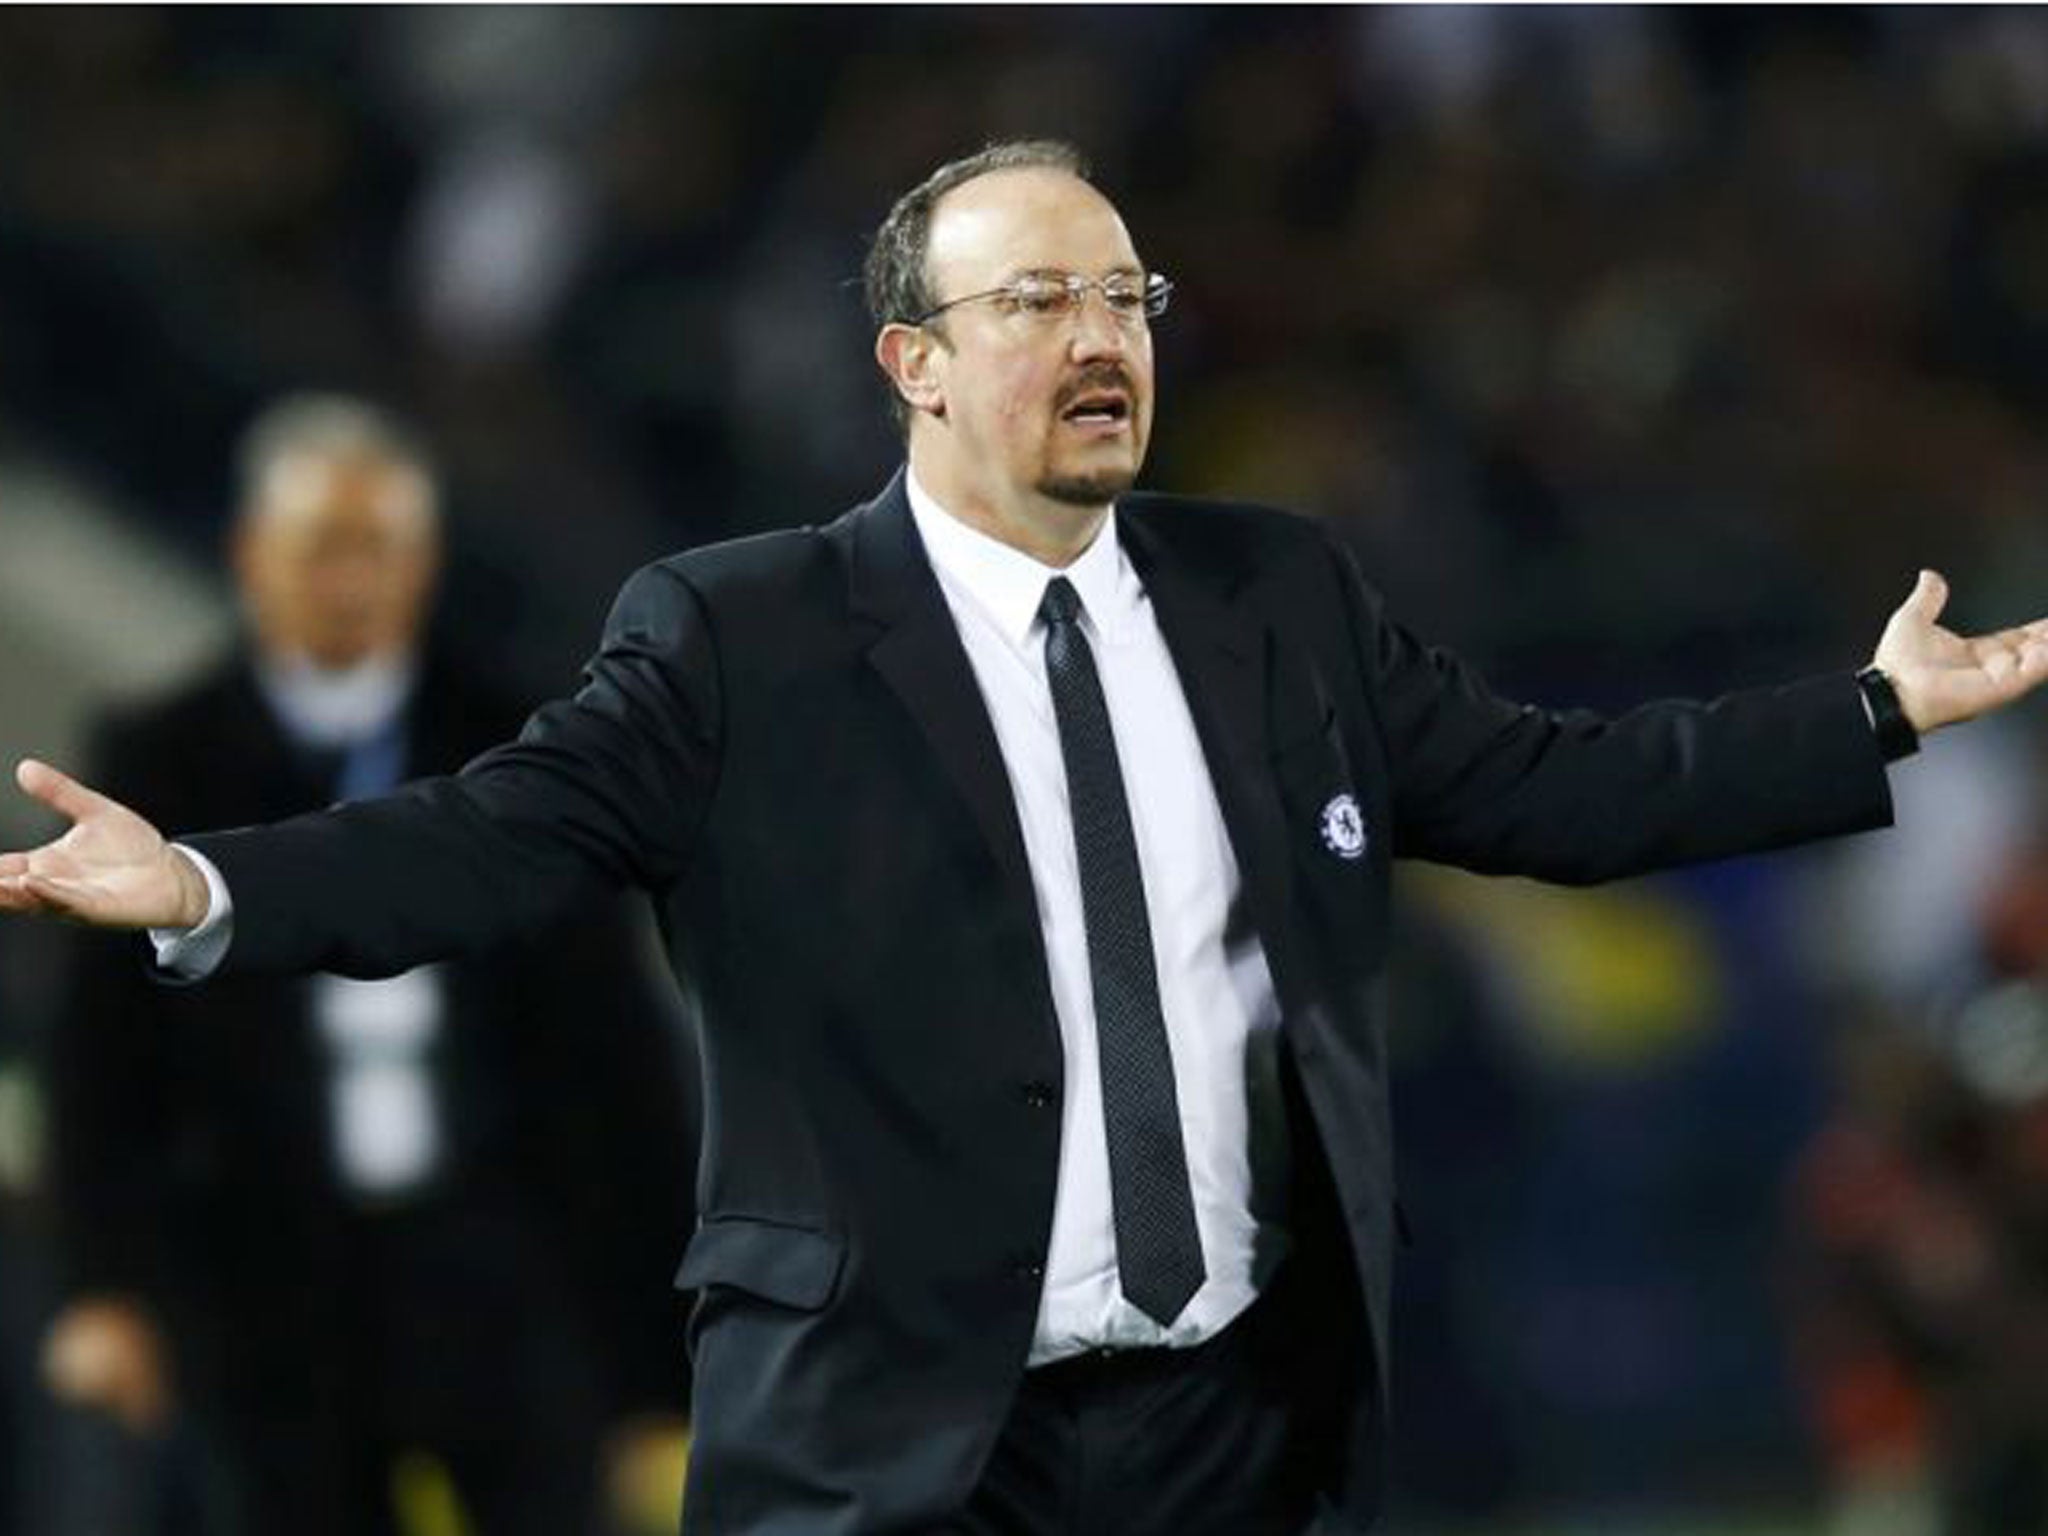 Rafael Benitez said there were no guarantees regarding John Terry’s return